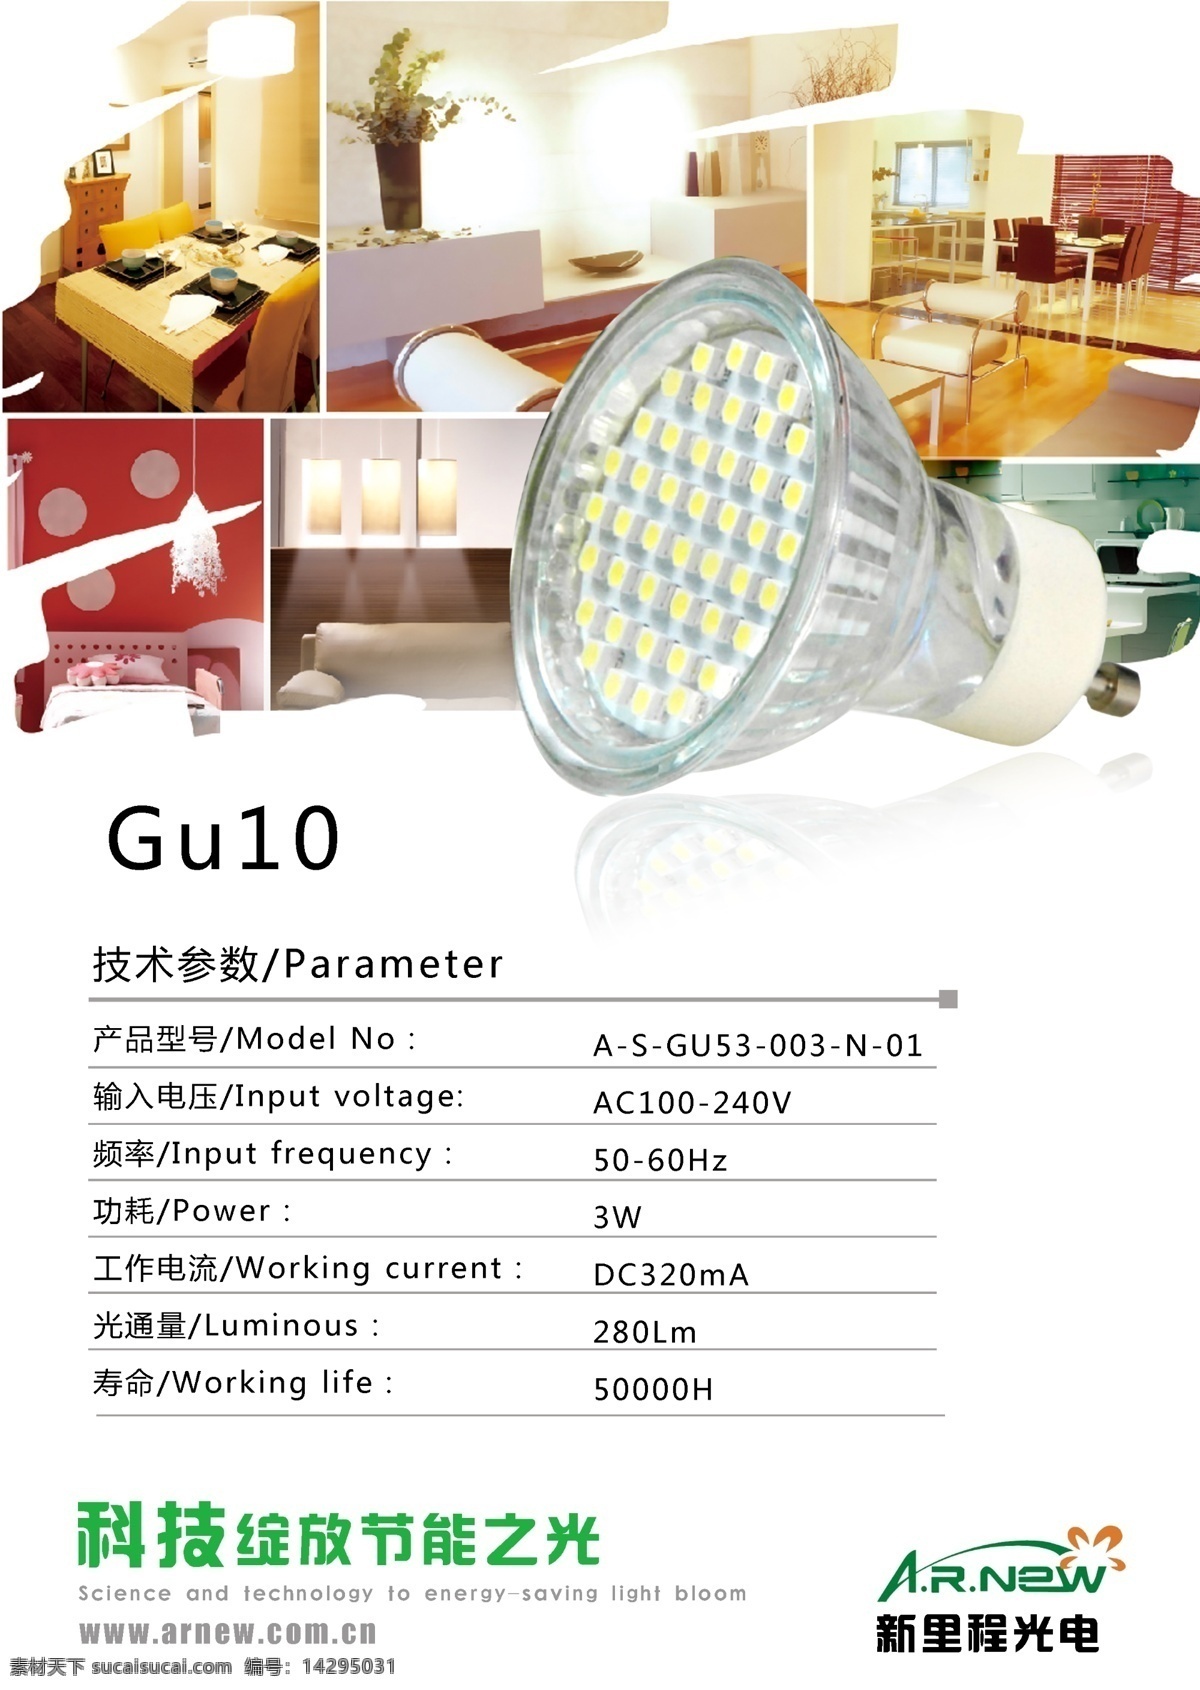 dm dm宣传单 led led灯海报 广告设计模板 射灯 宣传单 源文件 gu gu10 照明 光电海报 其他海报设计